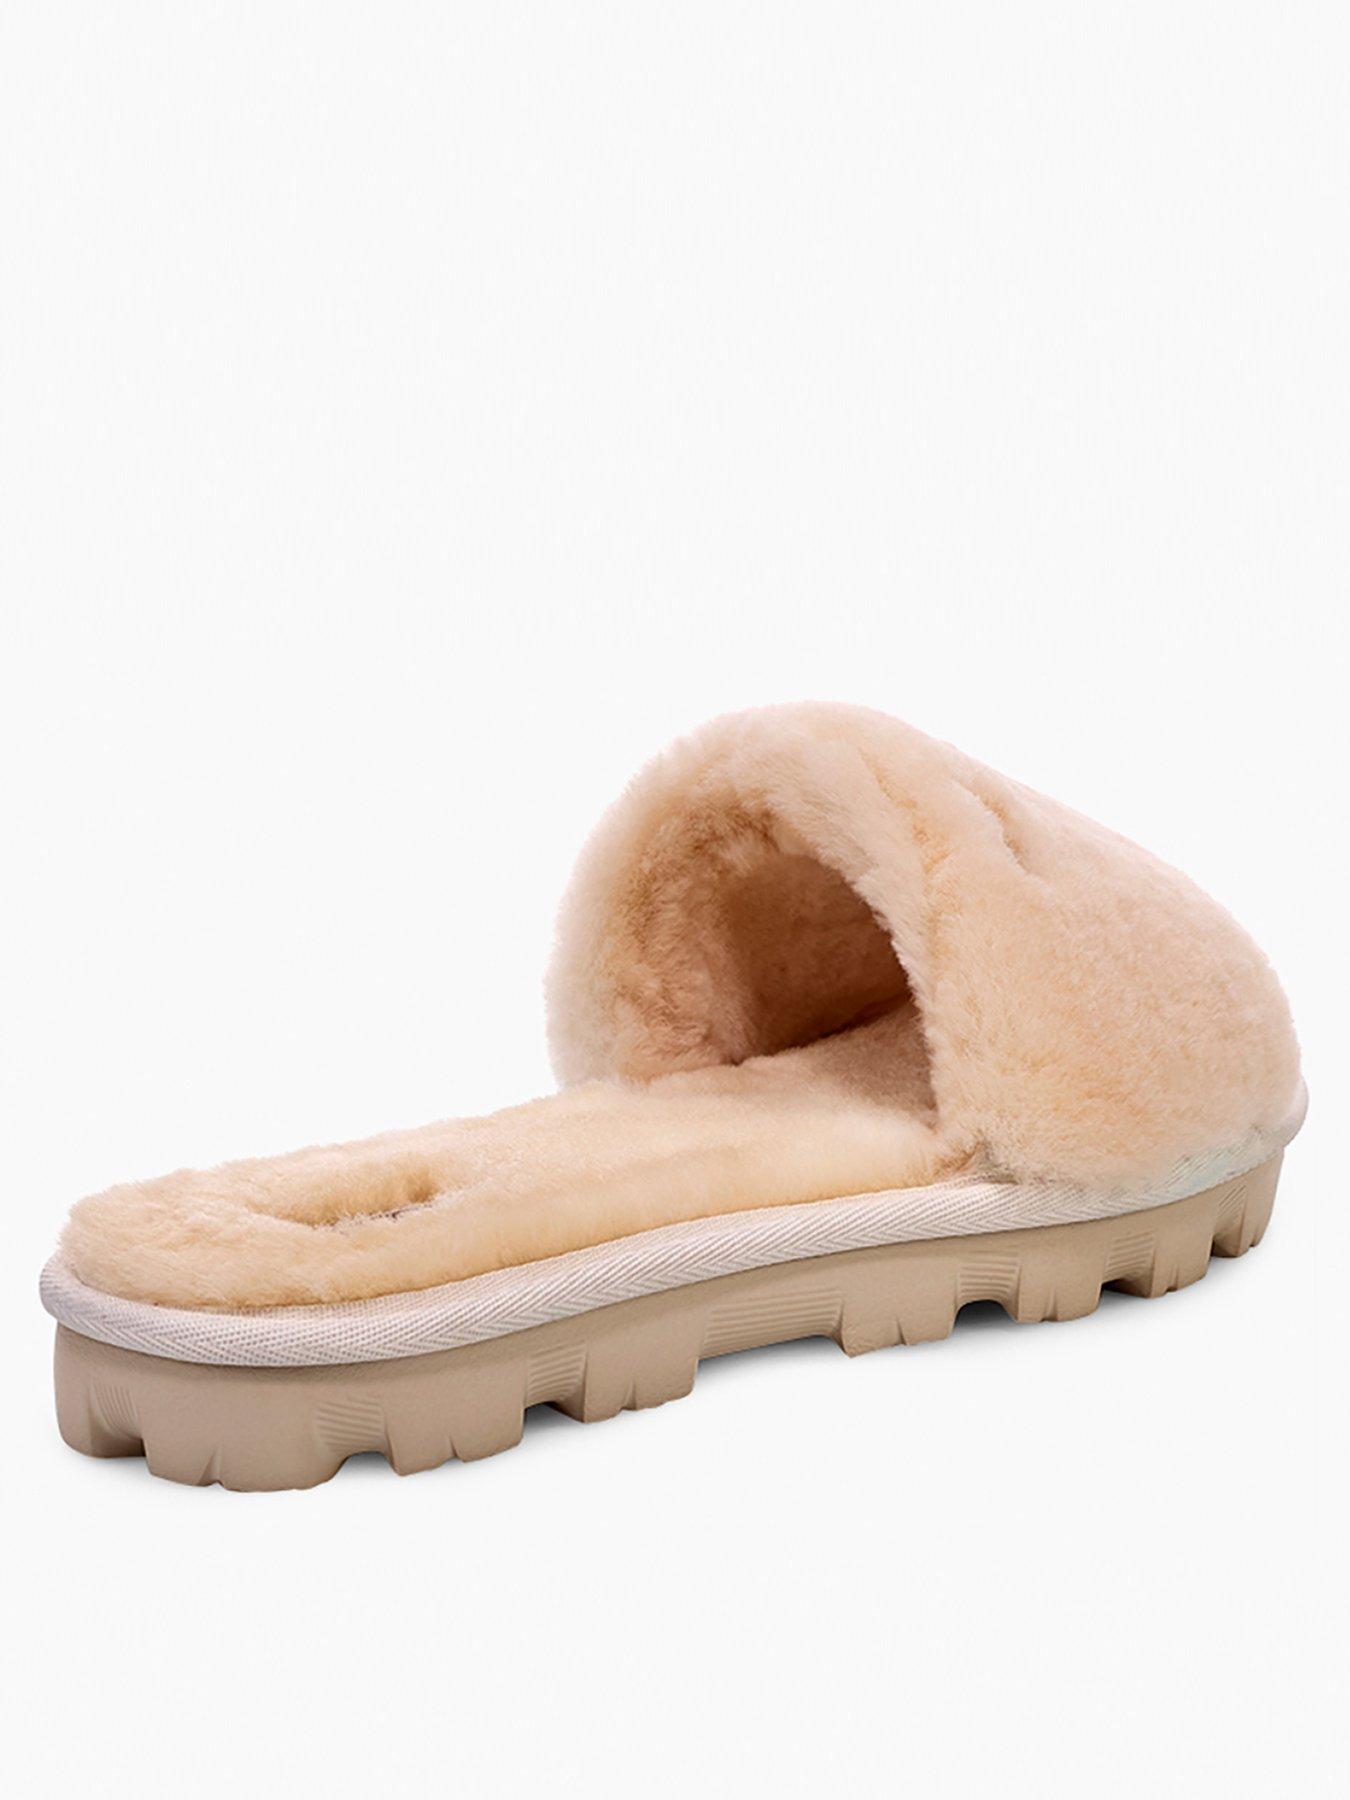 littlewoods ugg slippers